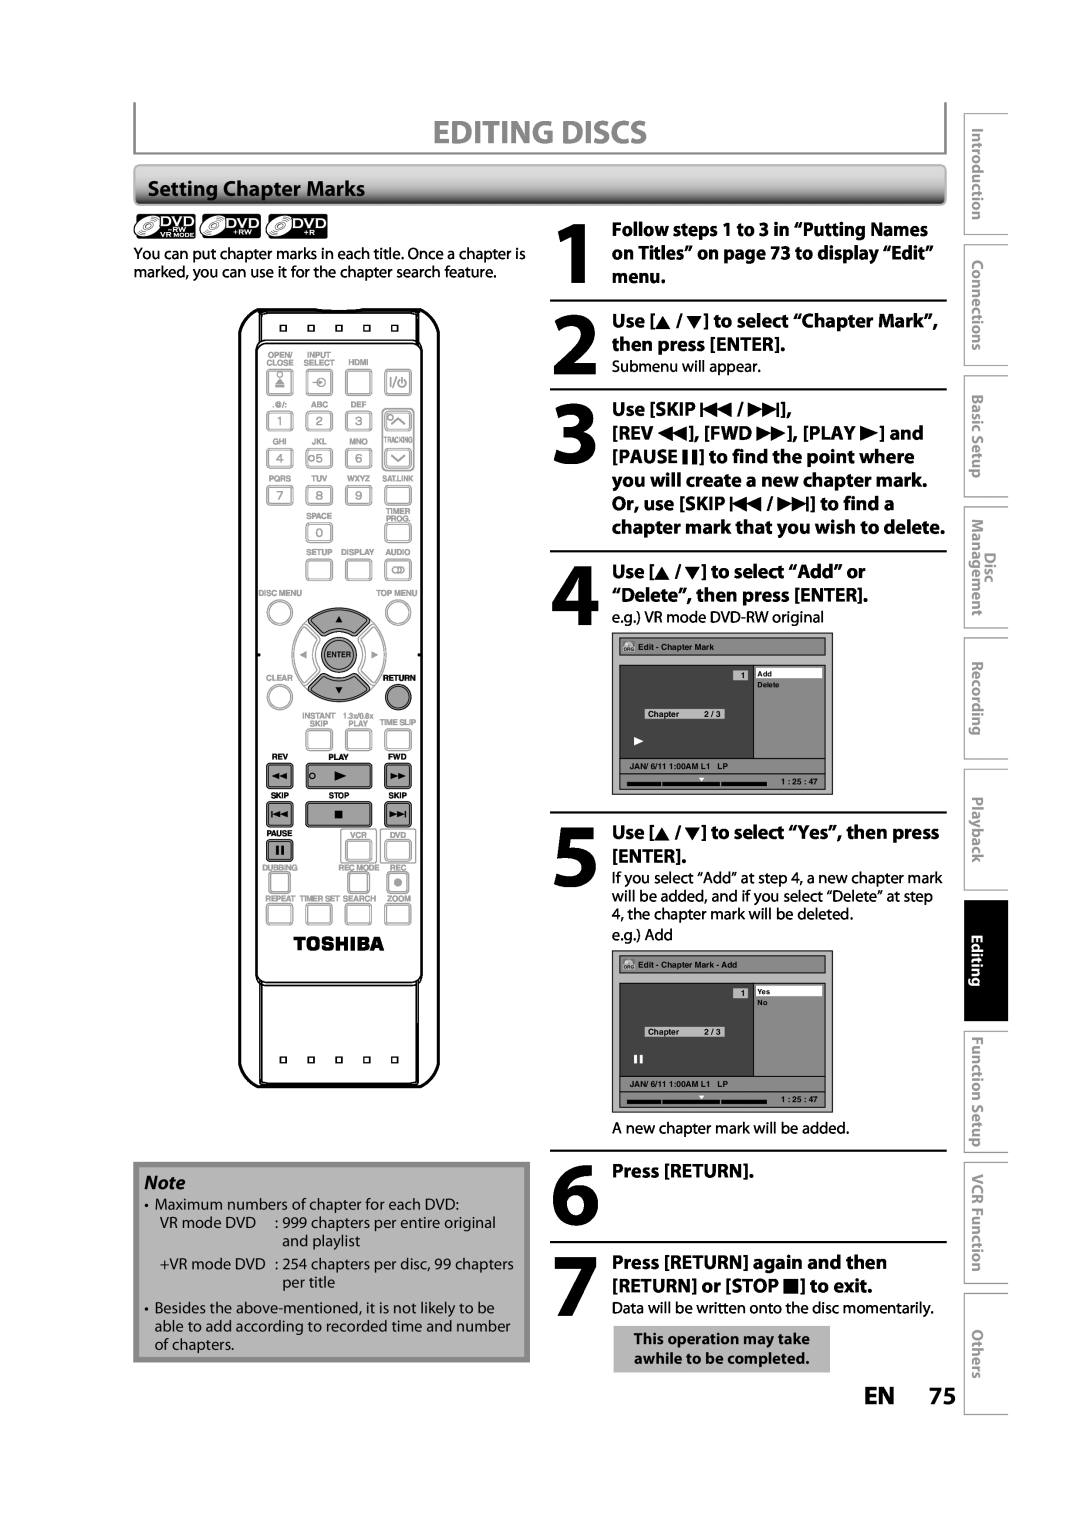 Toshiba DVR620KC Setting Chapter Marks, Use SKIP H / G, Use K / L to select “Yes”, then press ENTER, Press RETURN 